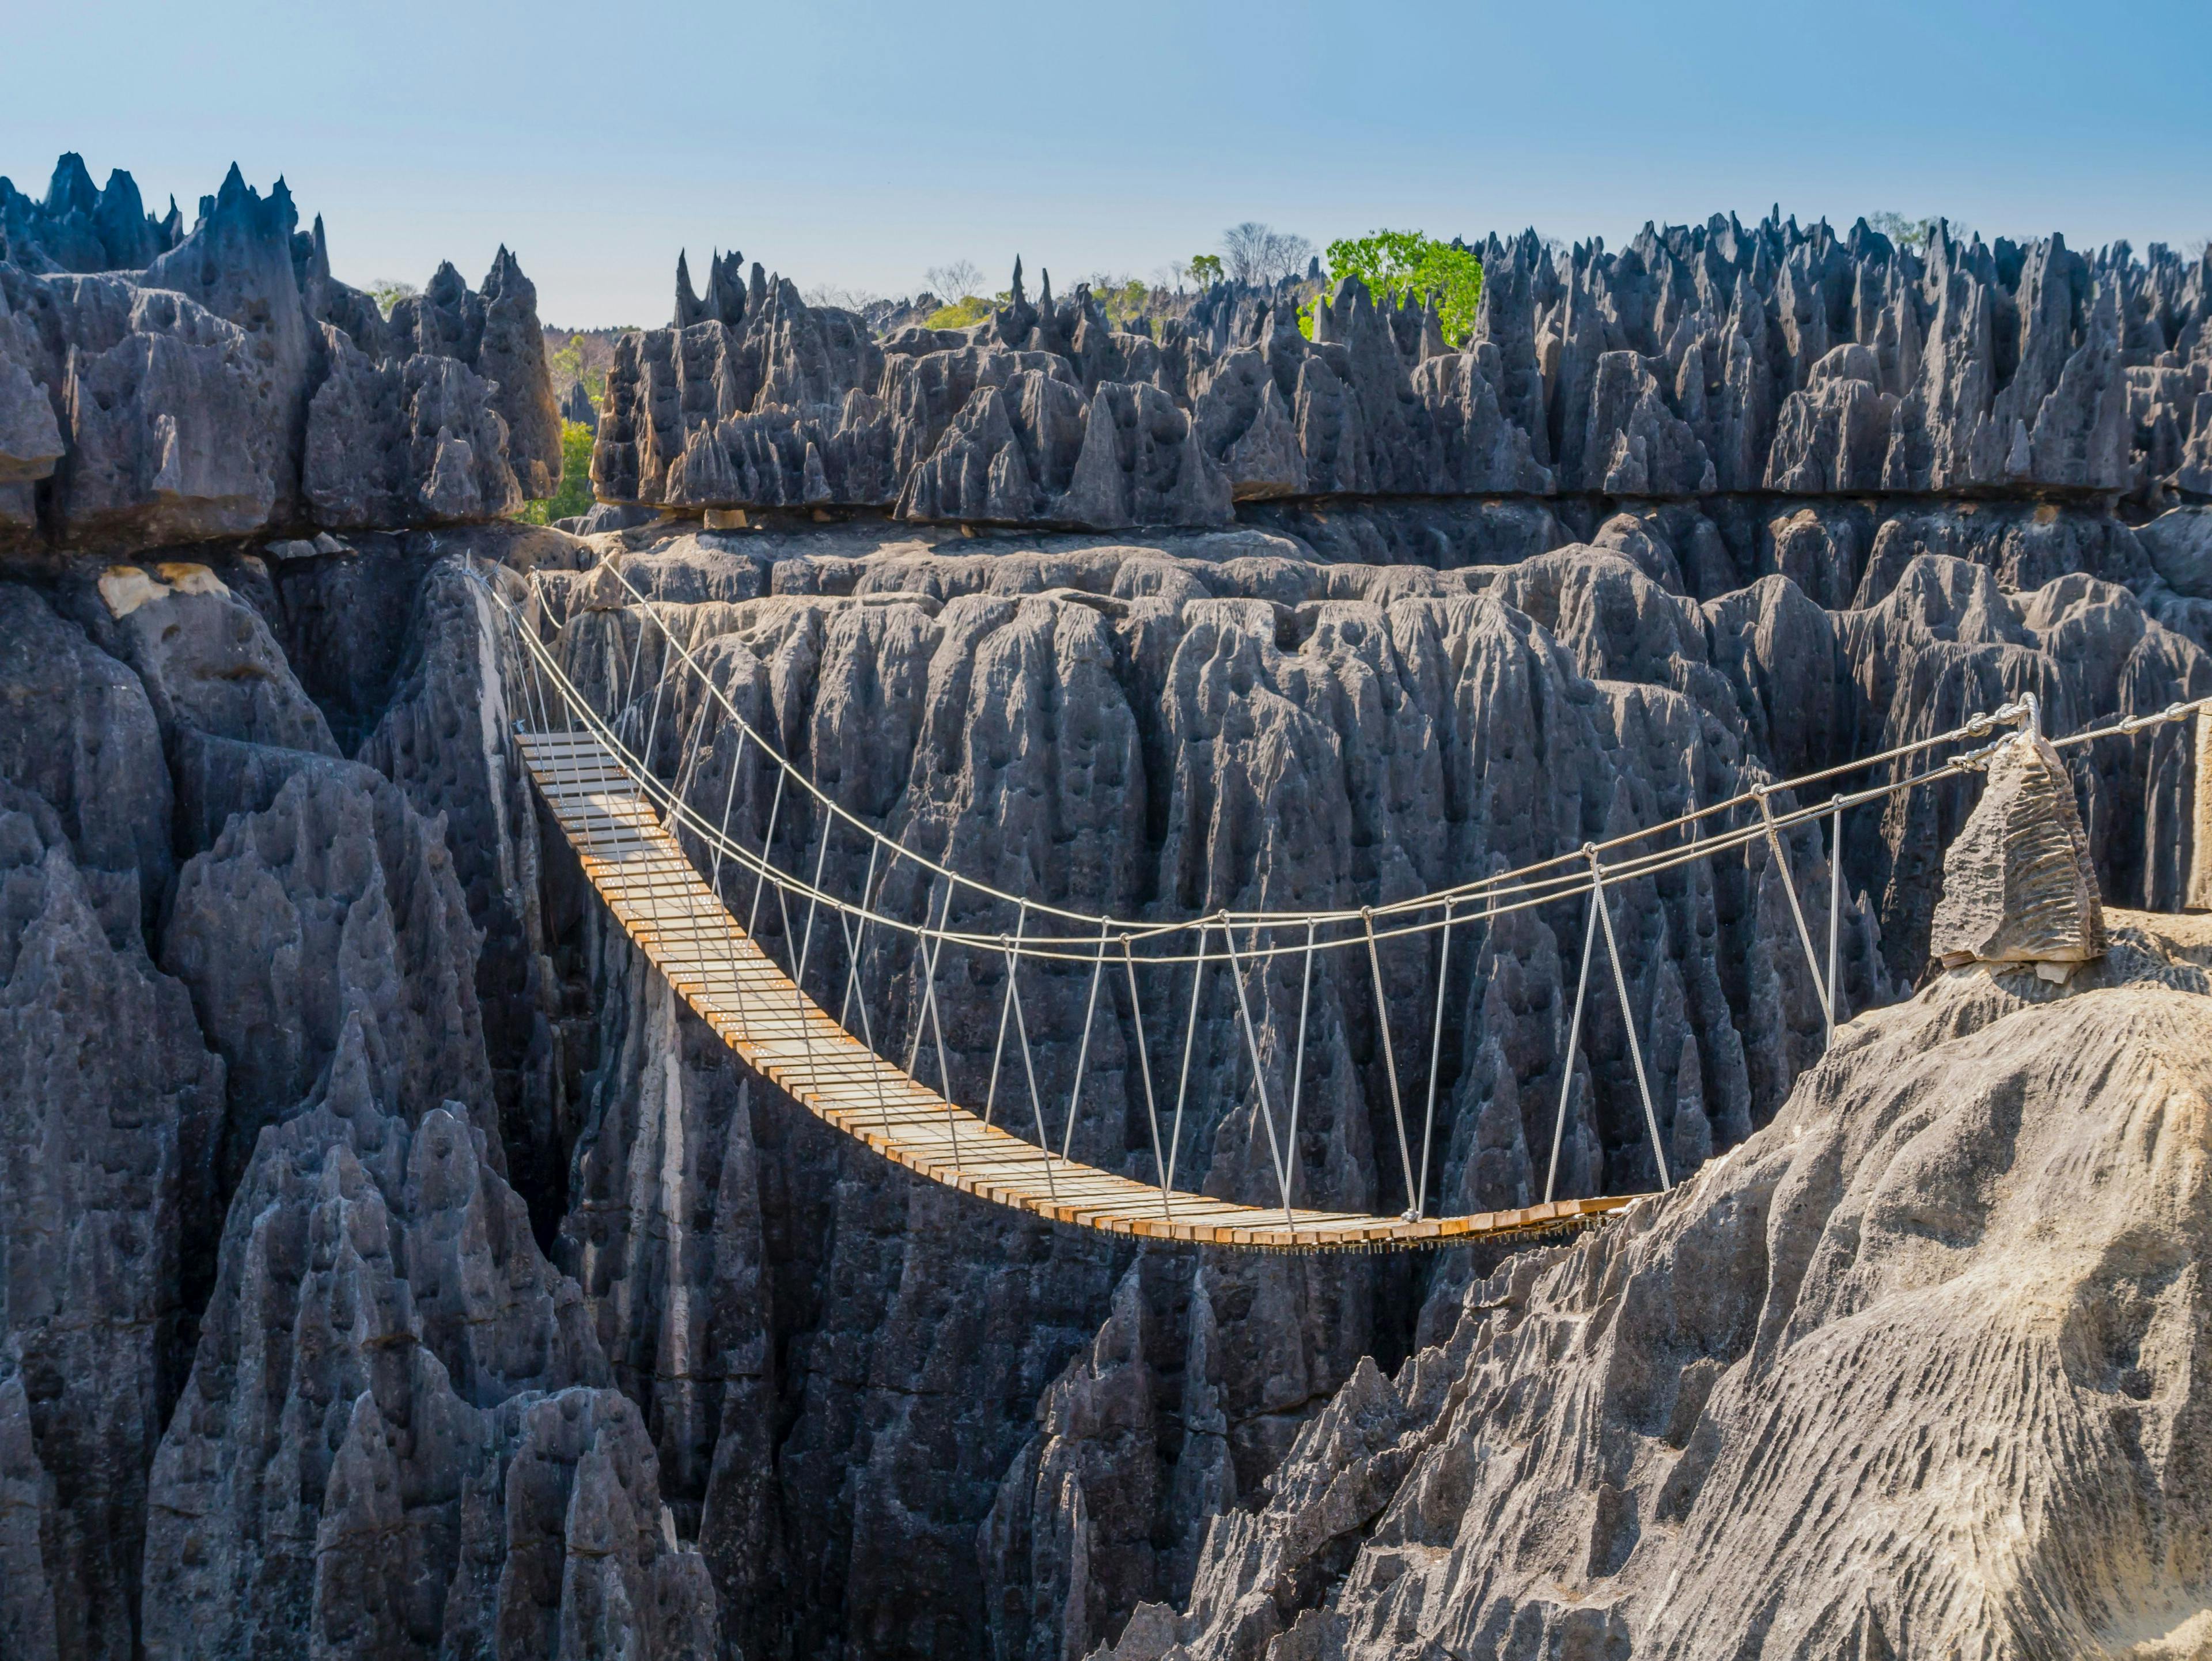 Hanging bridge over the canyon at Tsingy de Bemaraha National Park, Madagascar